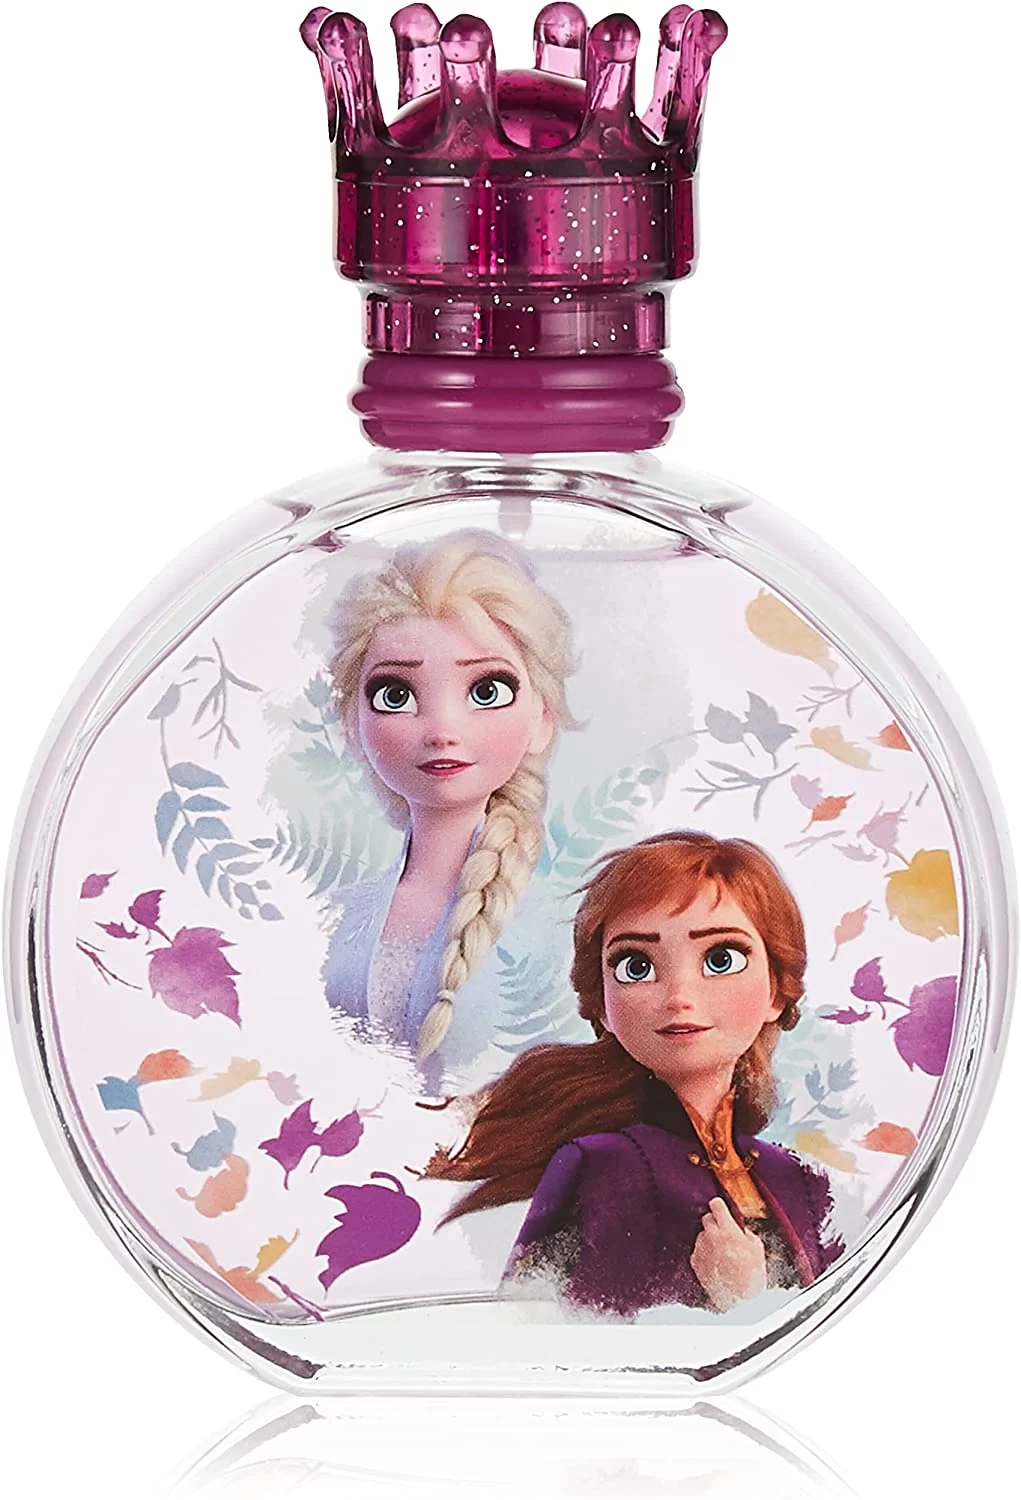 Best Perfumes For Kids
Disney Frozen 2 Perfume